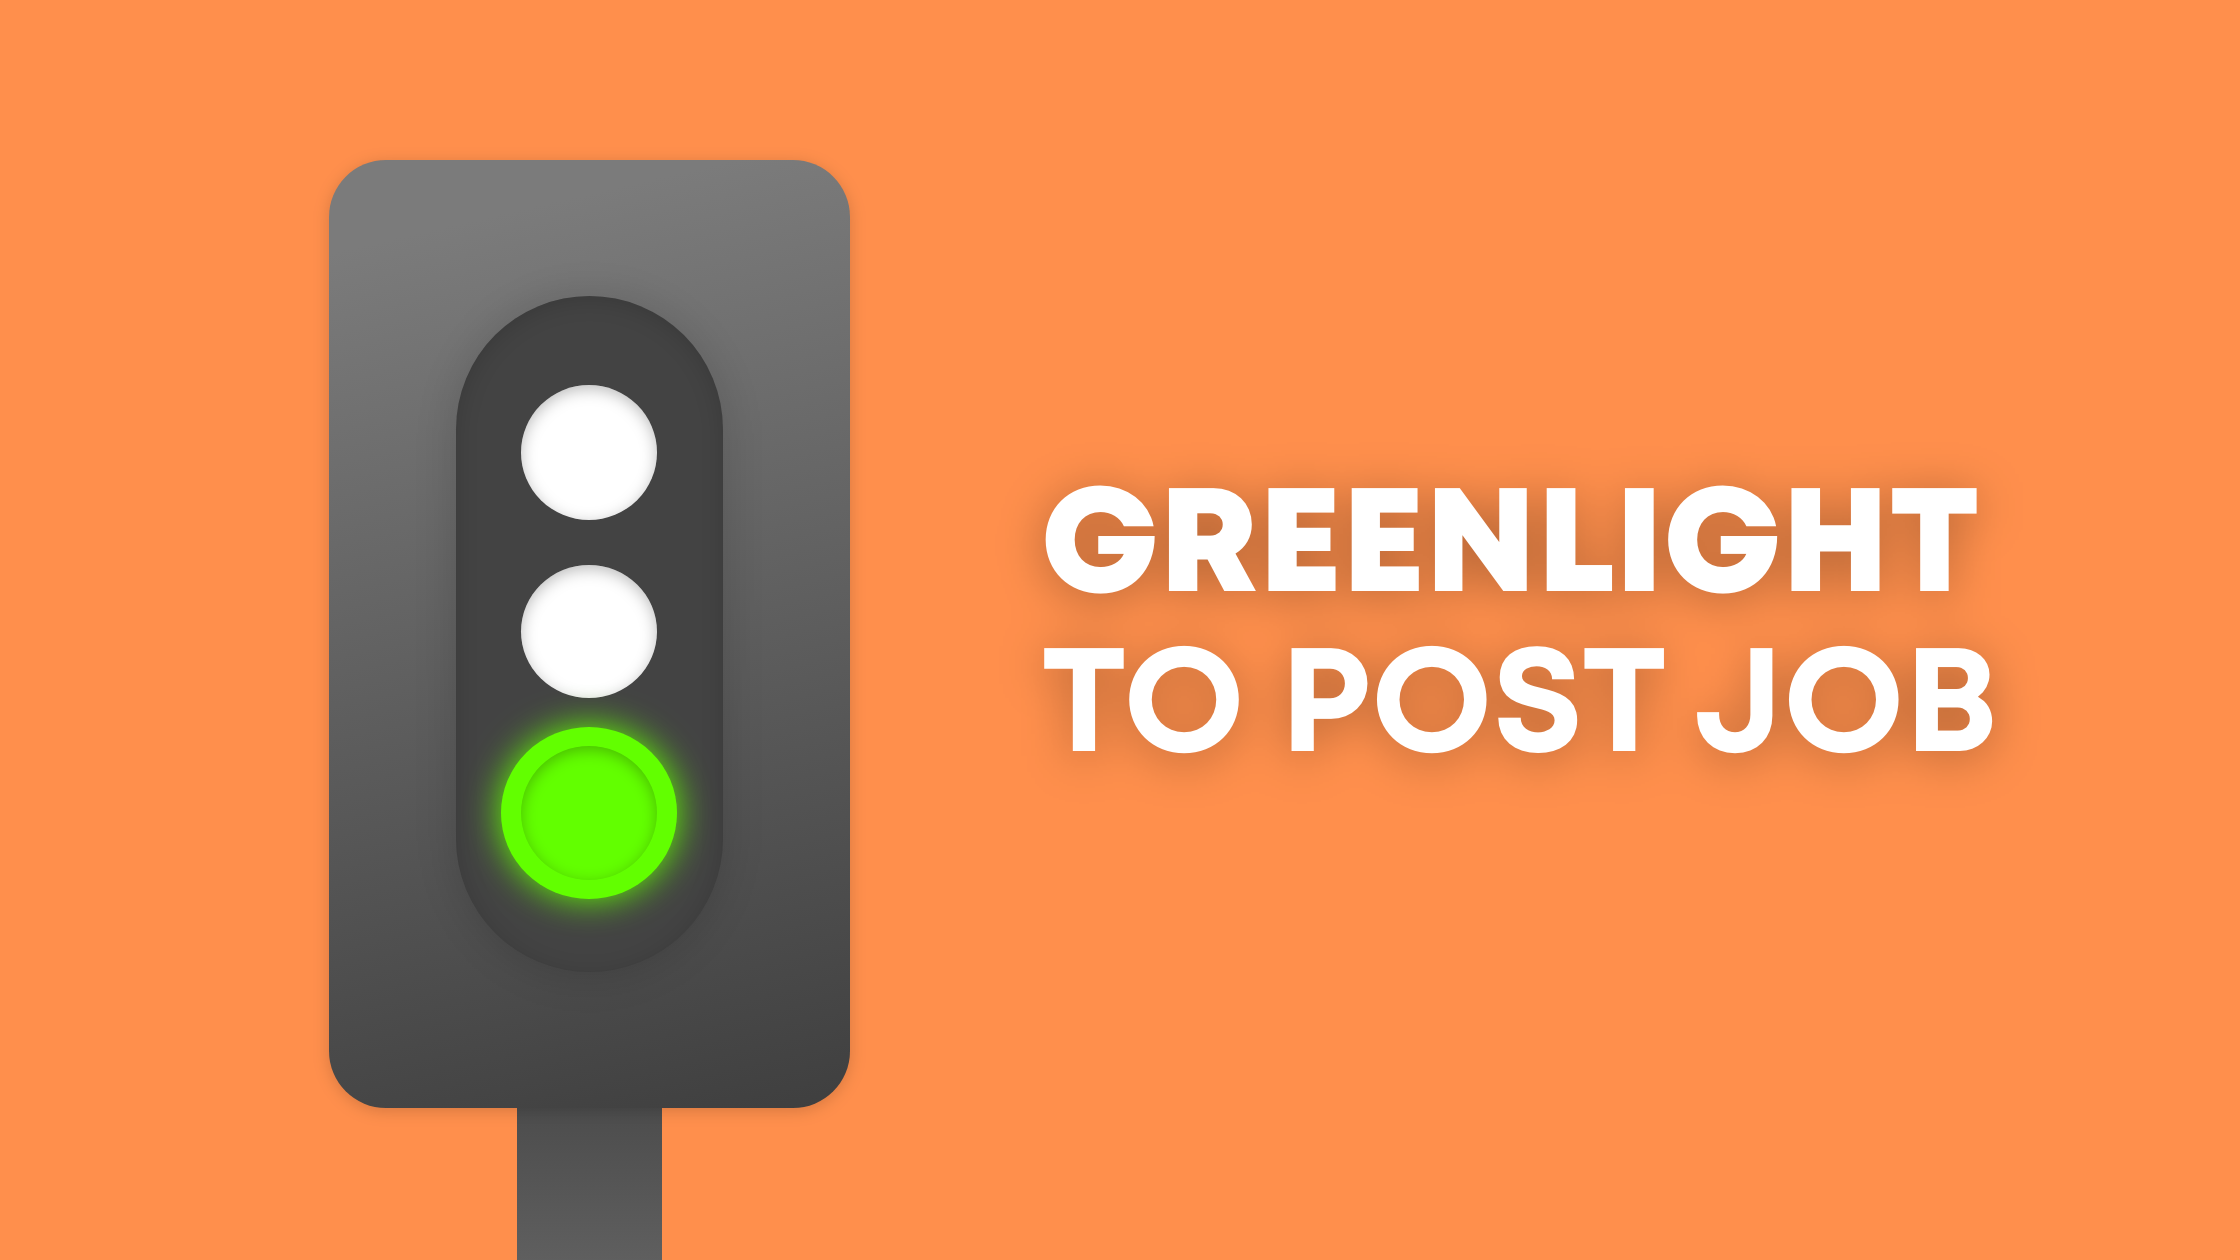 Greenlight-to-post-job